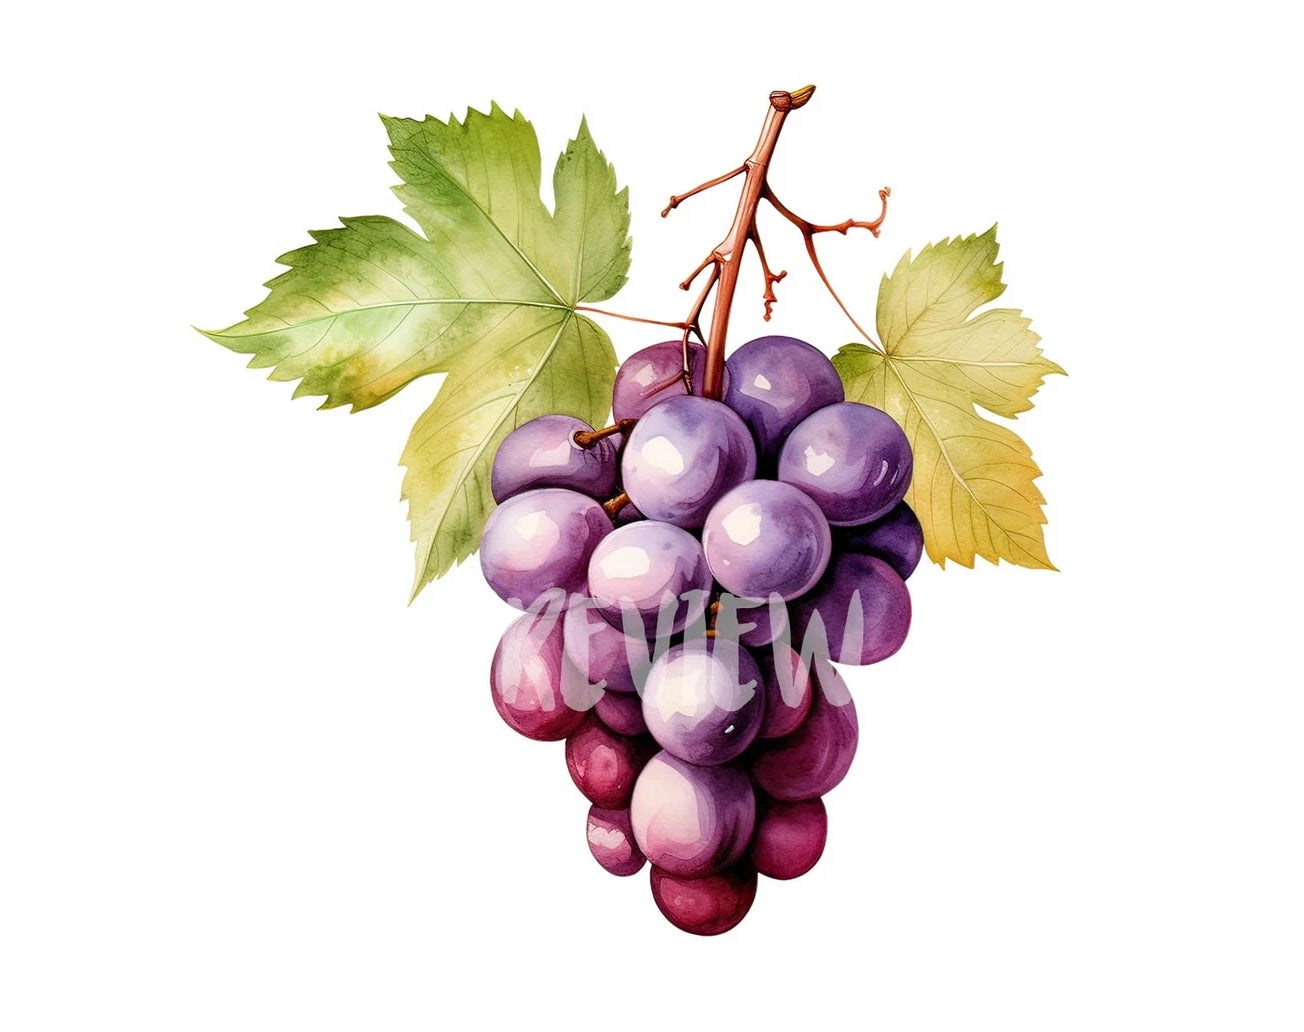 Watercolor Grapes Clipart